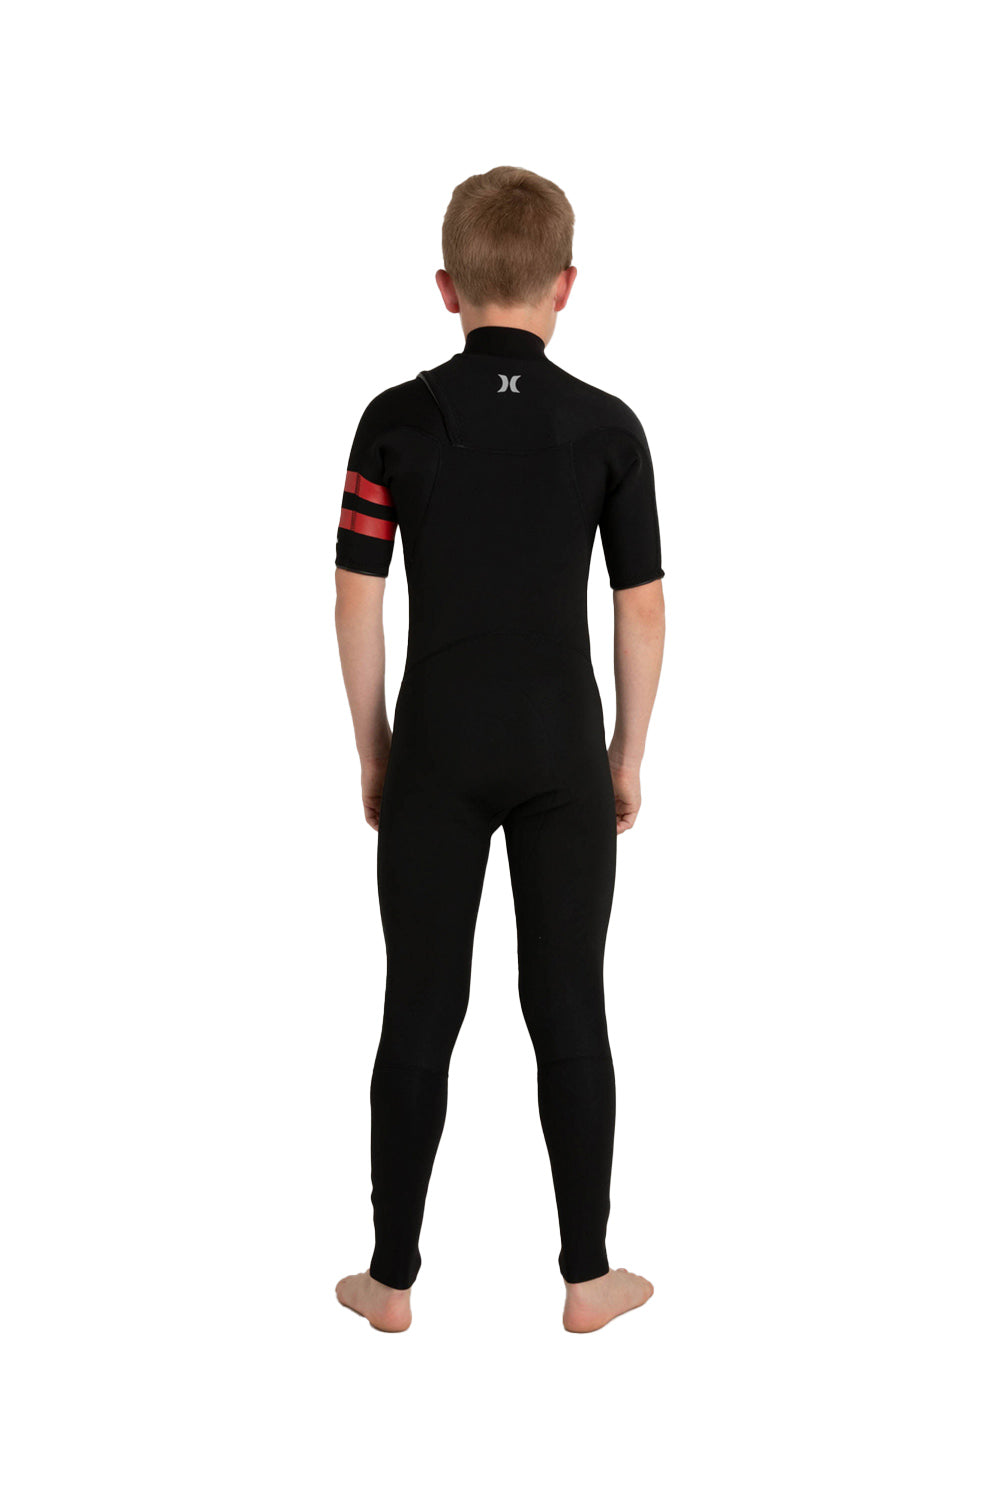 Hurley Youth Advantage Plus 2/2mm Short Sleeve Full Wetsuit - Black